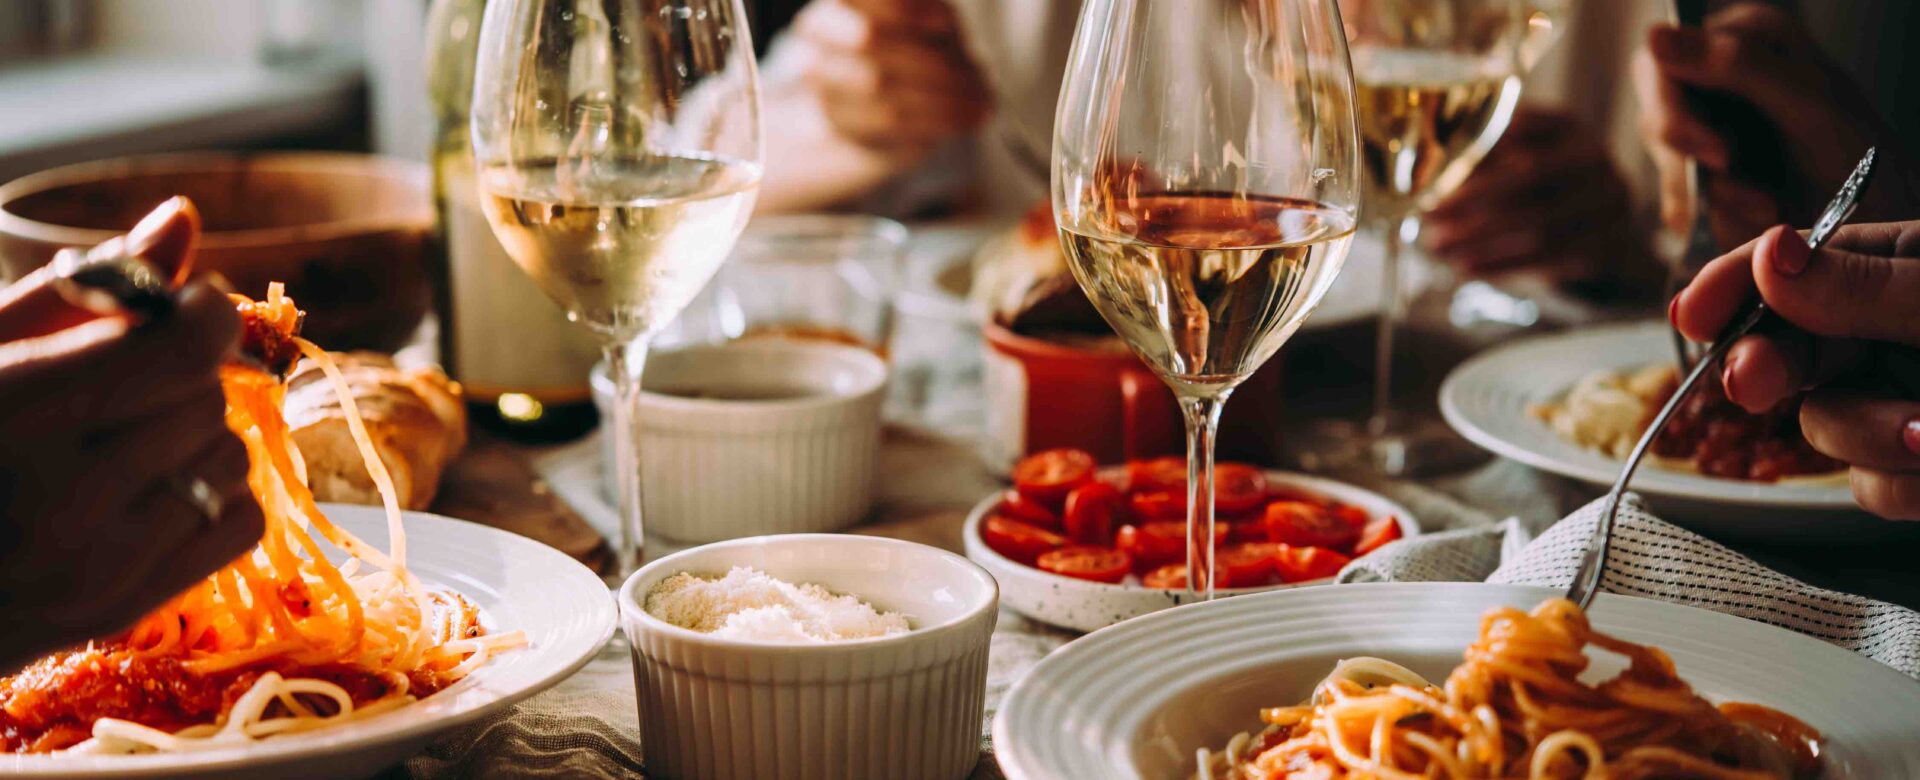 Welke wijn drink je bij spaghetti carbonara?